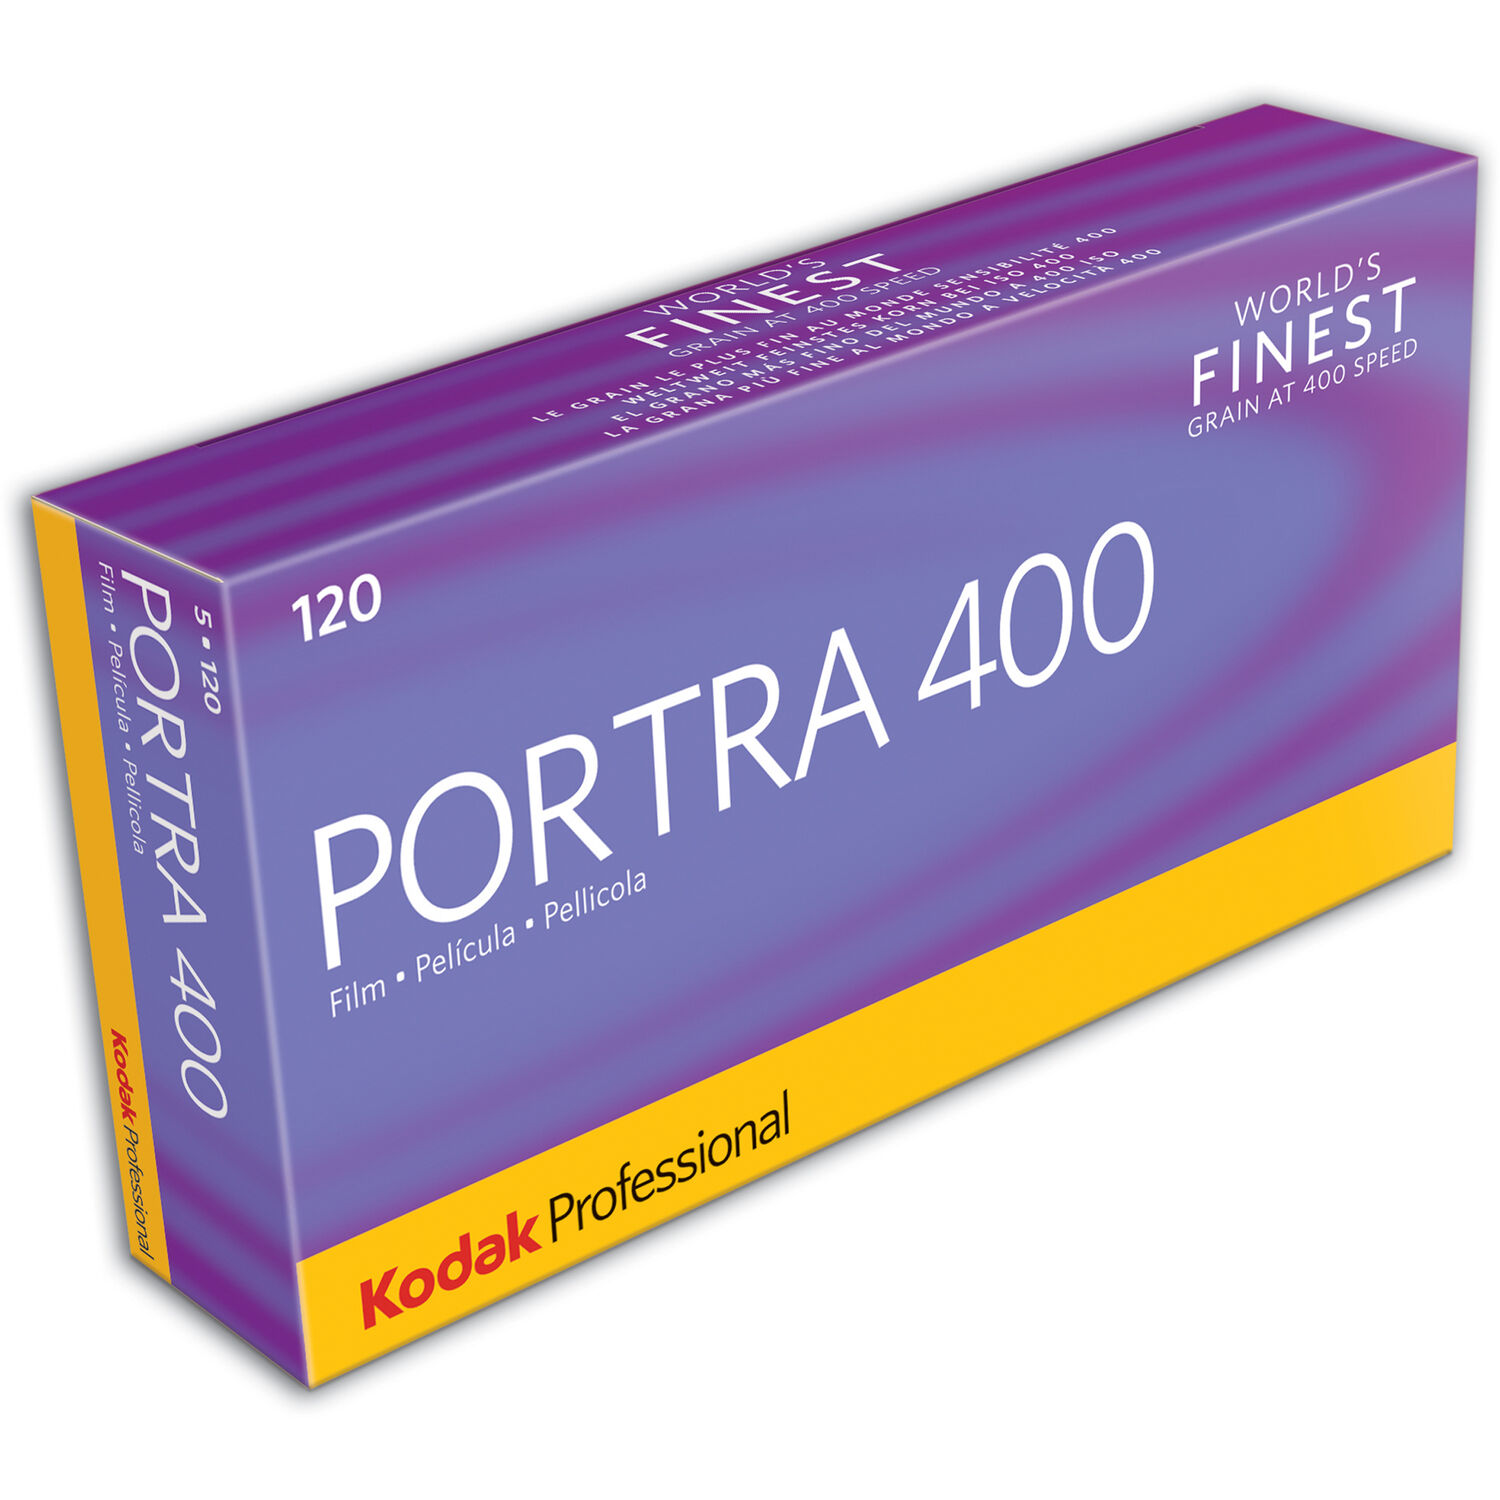 Kodak Professional Portra 400 Color Negative Film (120 Roll Film, 5 rolls)